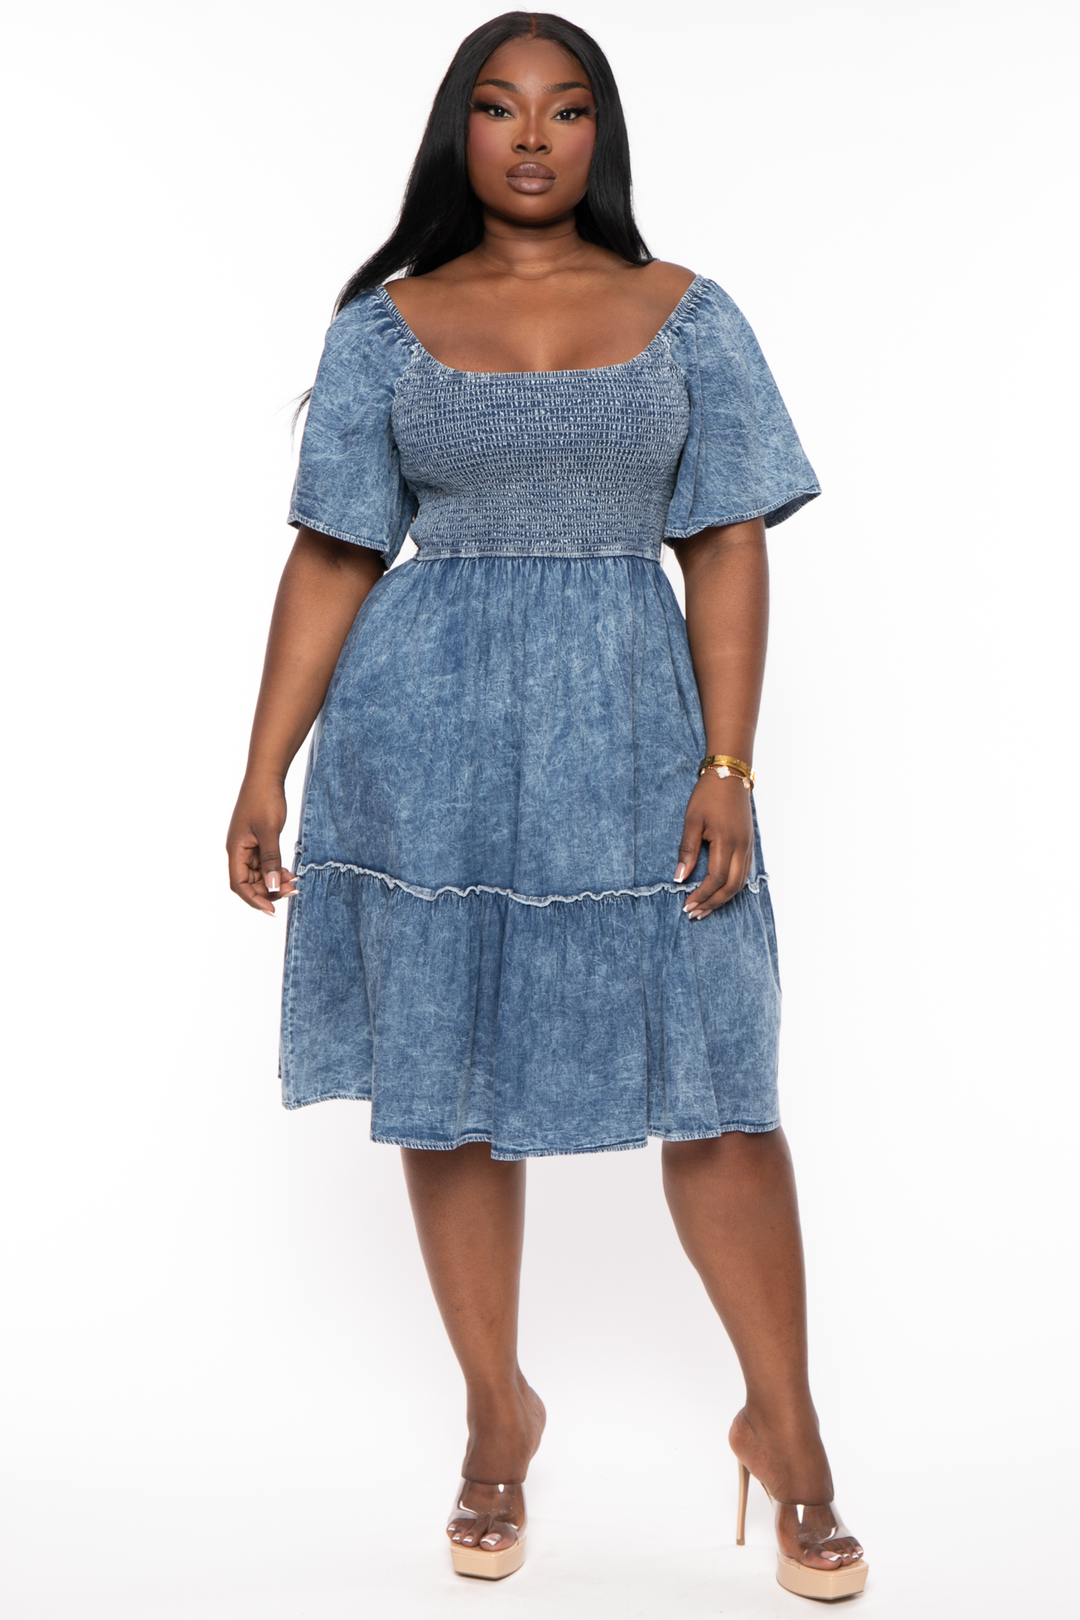 SHOPIN LA Dresses 1X / Blue Plus Size Cheliza Denim Smocked  Dress - Blue